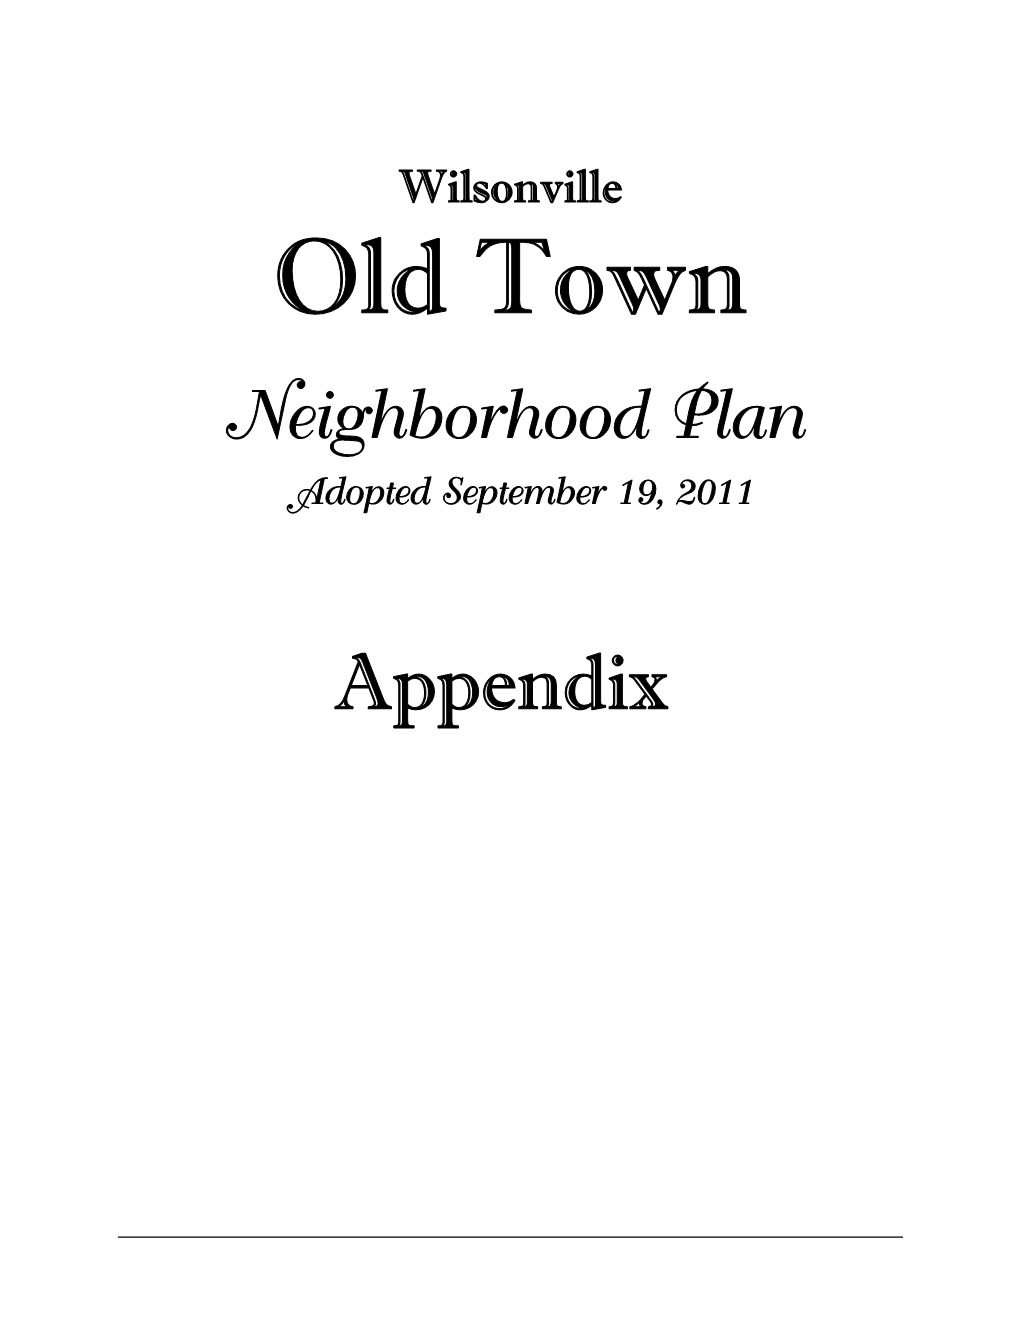 Old Town Neighborhood Plan Appendices